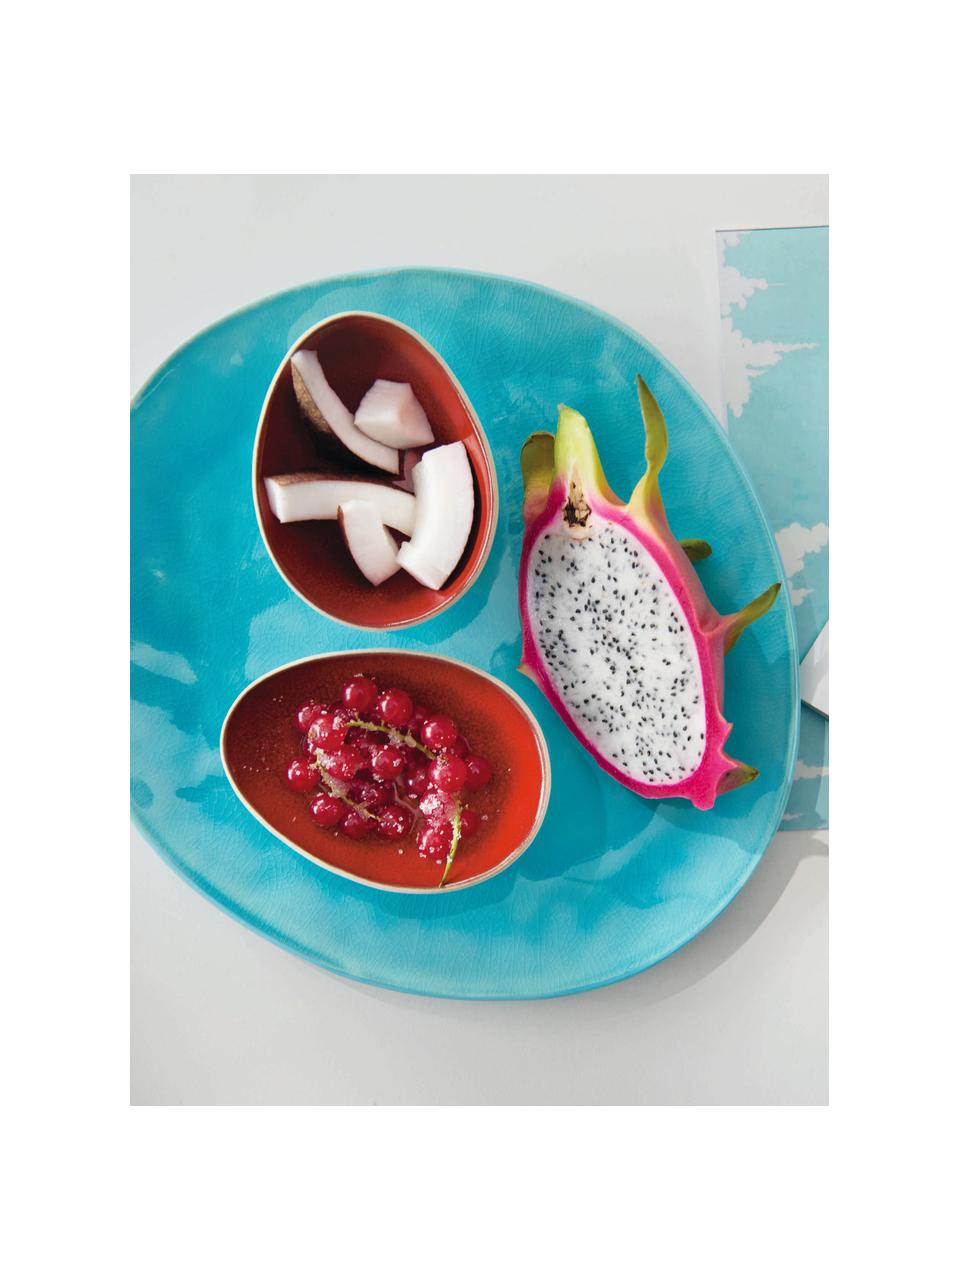 Porzellan-Frühstücksteller à la Plage mit Craquelé-Glasur matt/glänzend, 2 Stück, Porzellan, Craquele-Glasur, Türkis, 20 x 2 cm